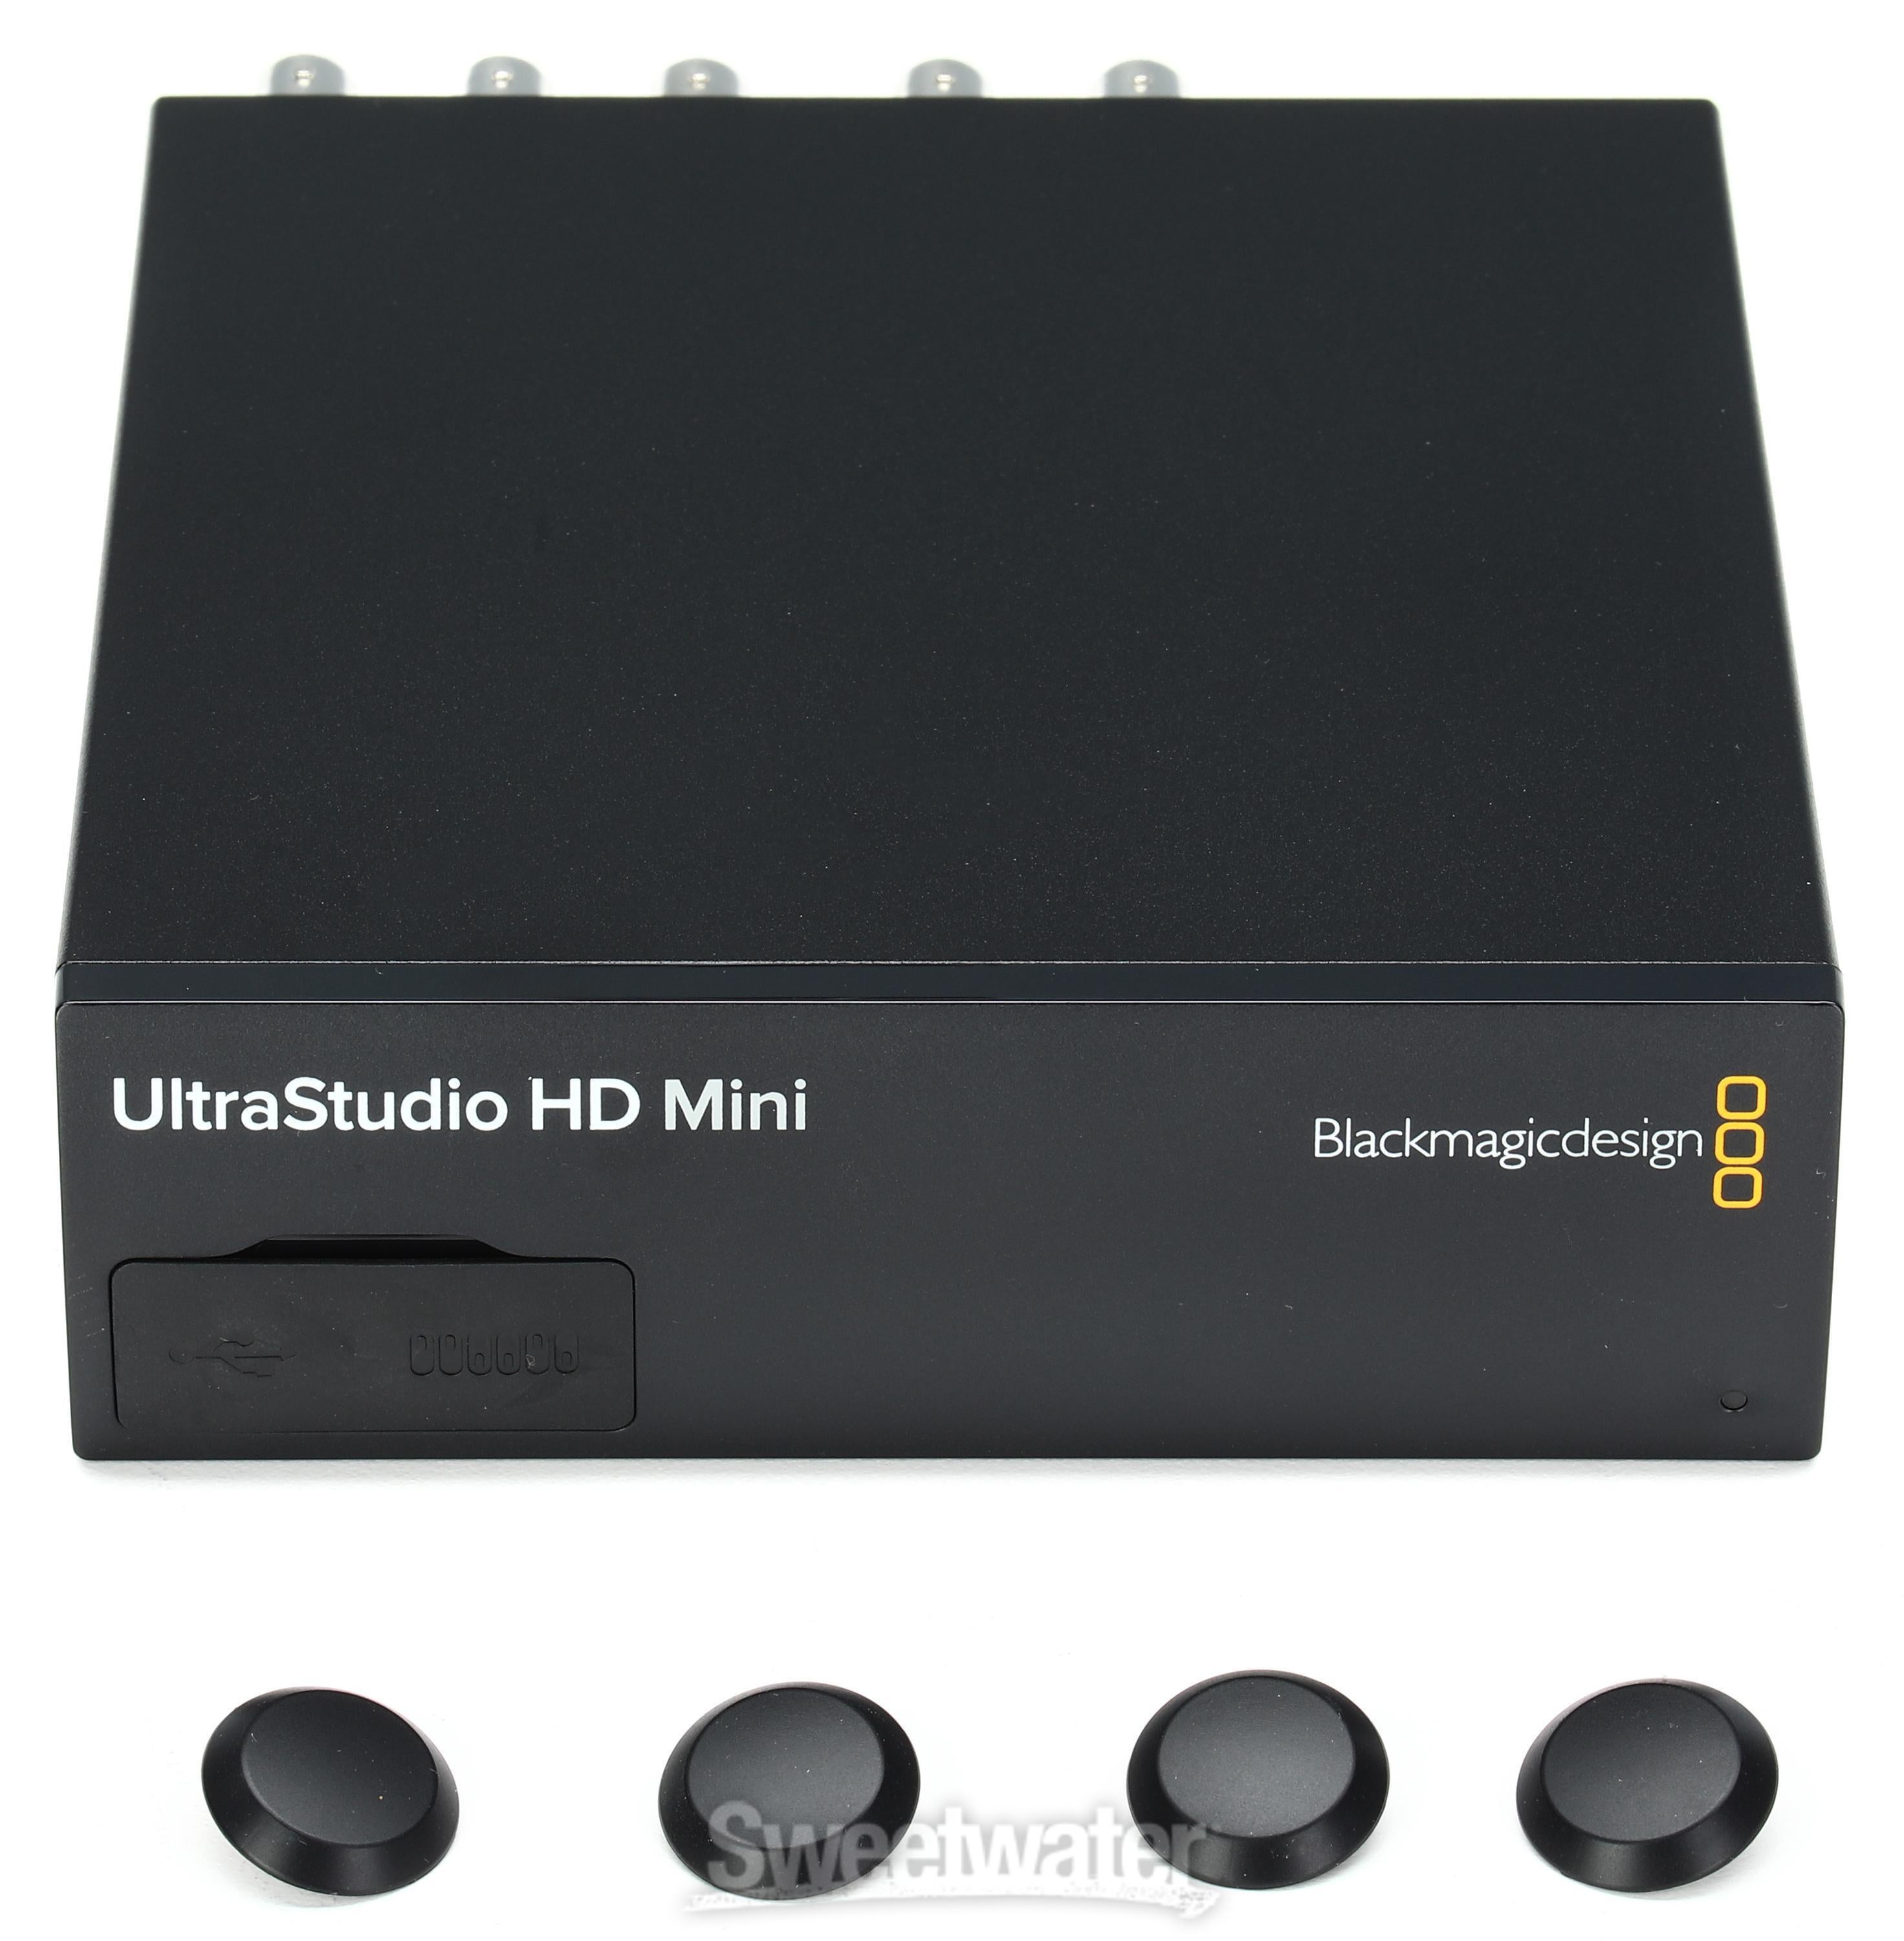 Blackmagic Design UltraStudio HD Mini Broadcast Capture and